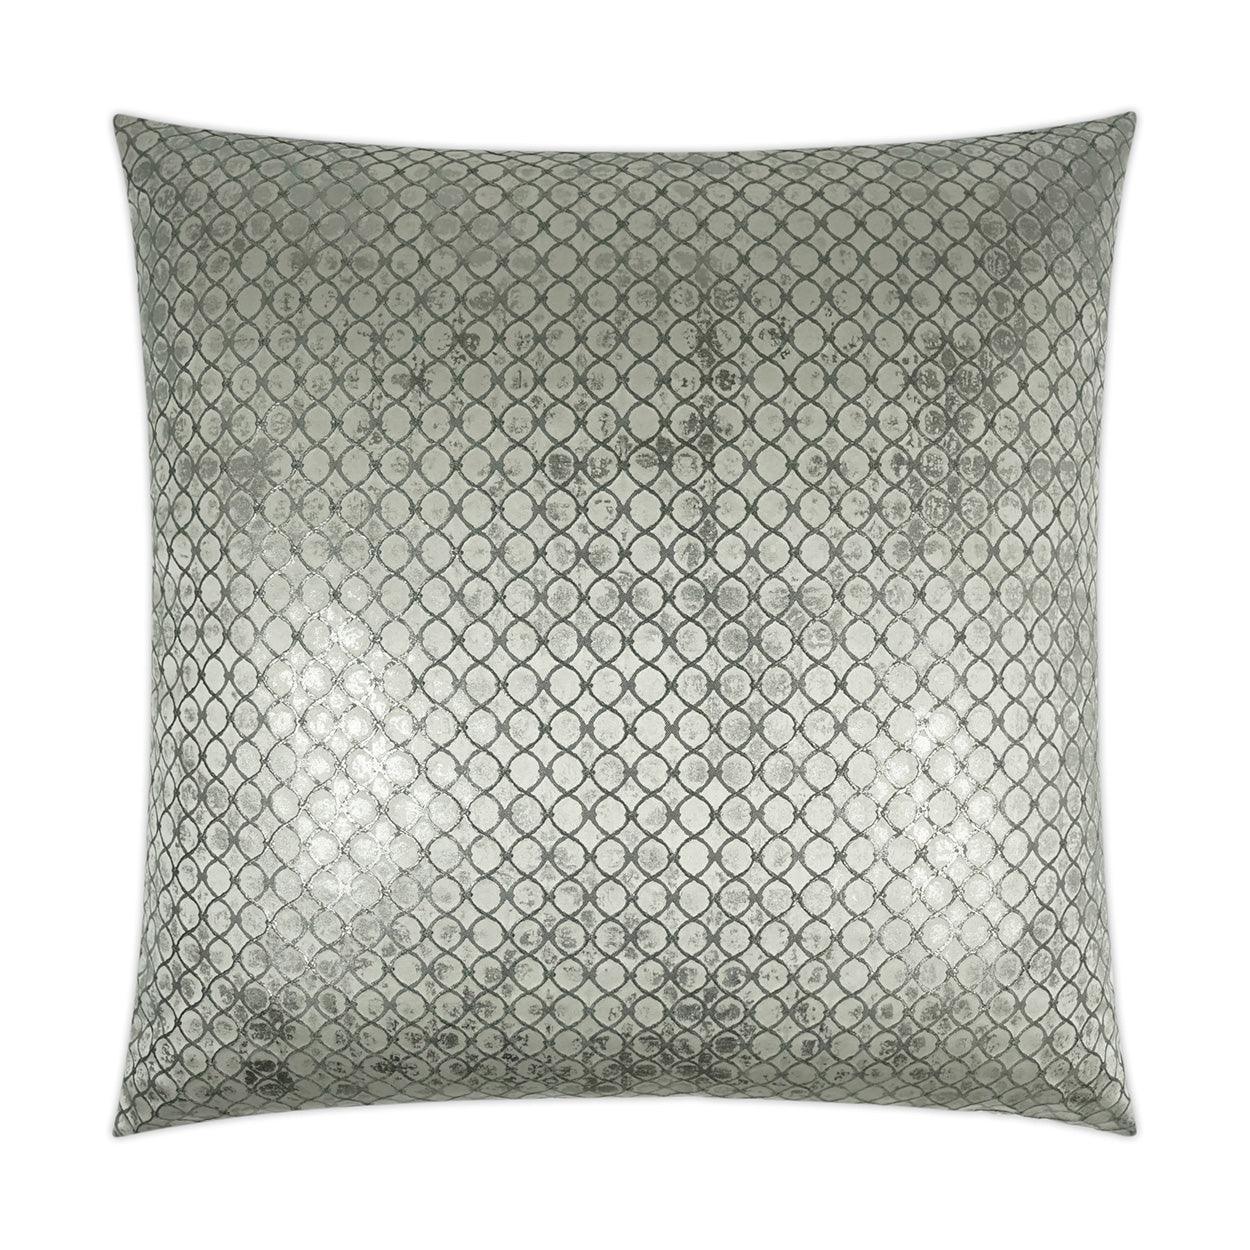 Beadling Glam Circular Dots Silver Large Throw Pillow With Insert - Uptown Sebastian